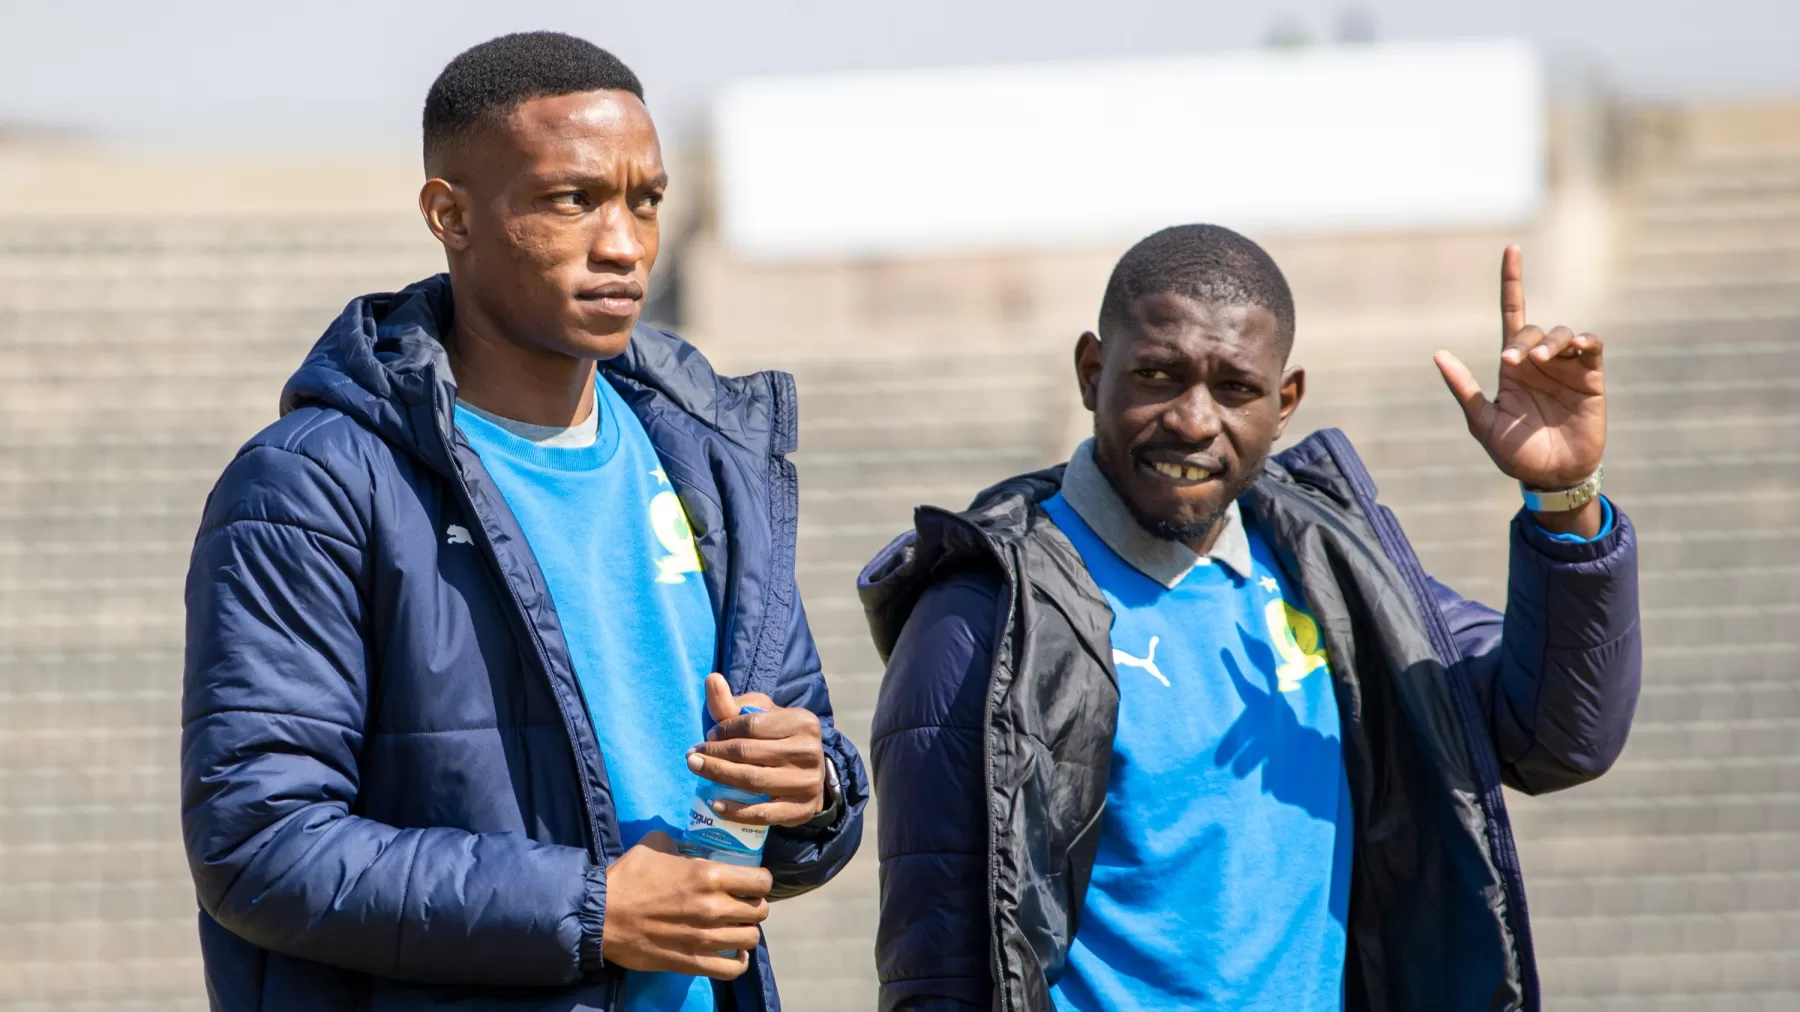 Mamelodi Sundowns player Aubrey Modiba picks up Polokwane City players that could pose danger